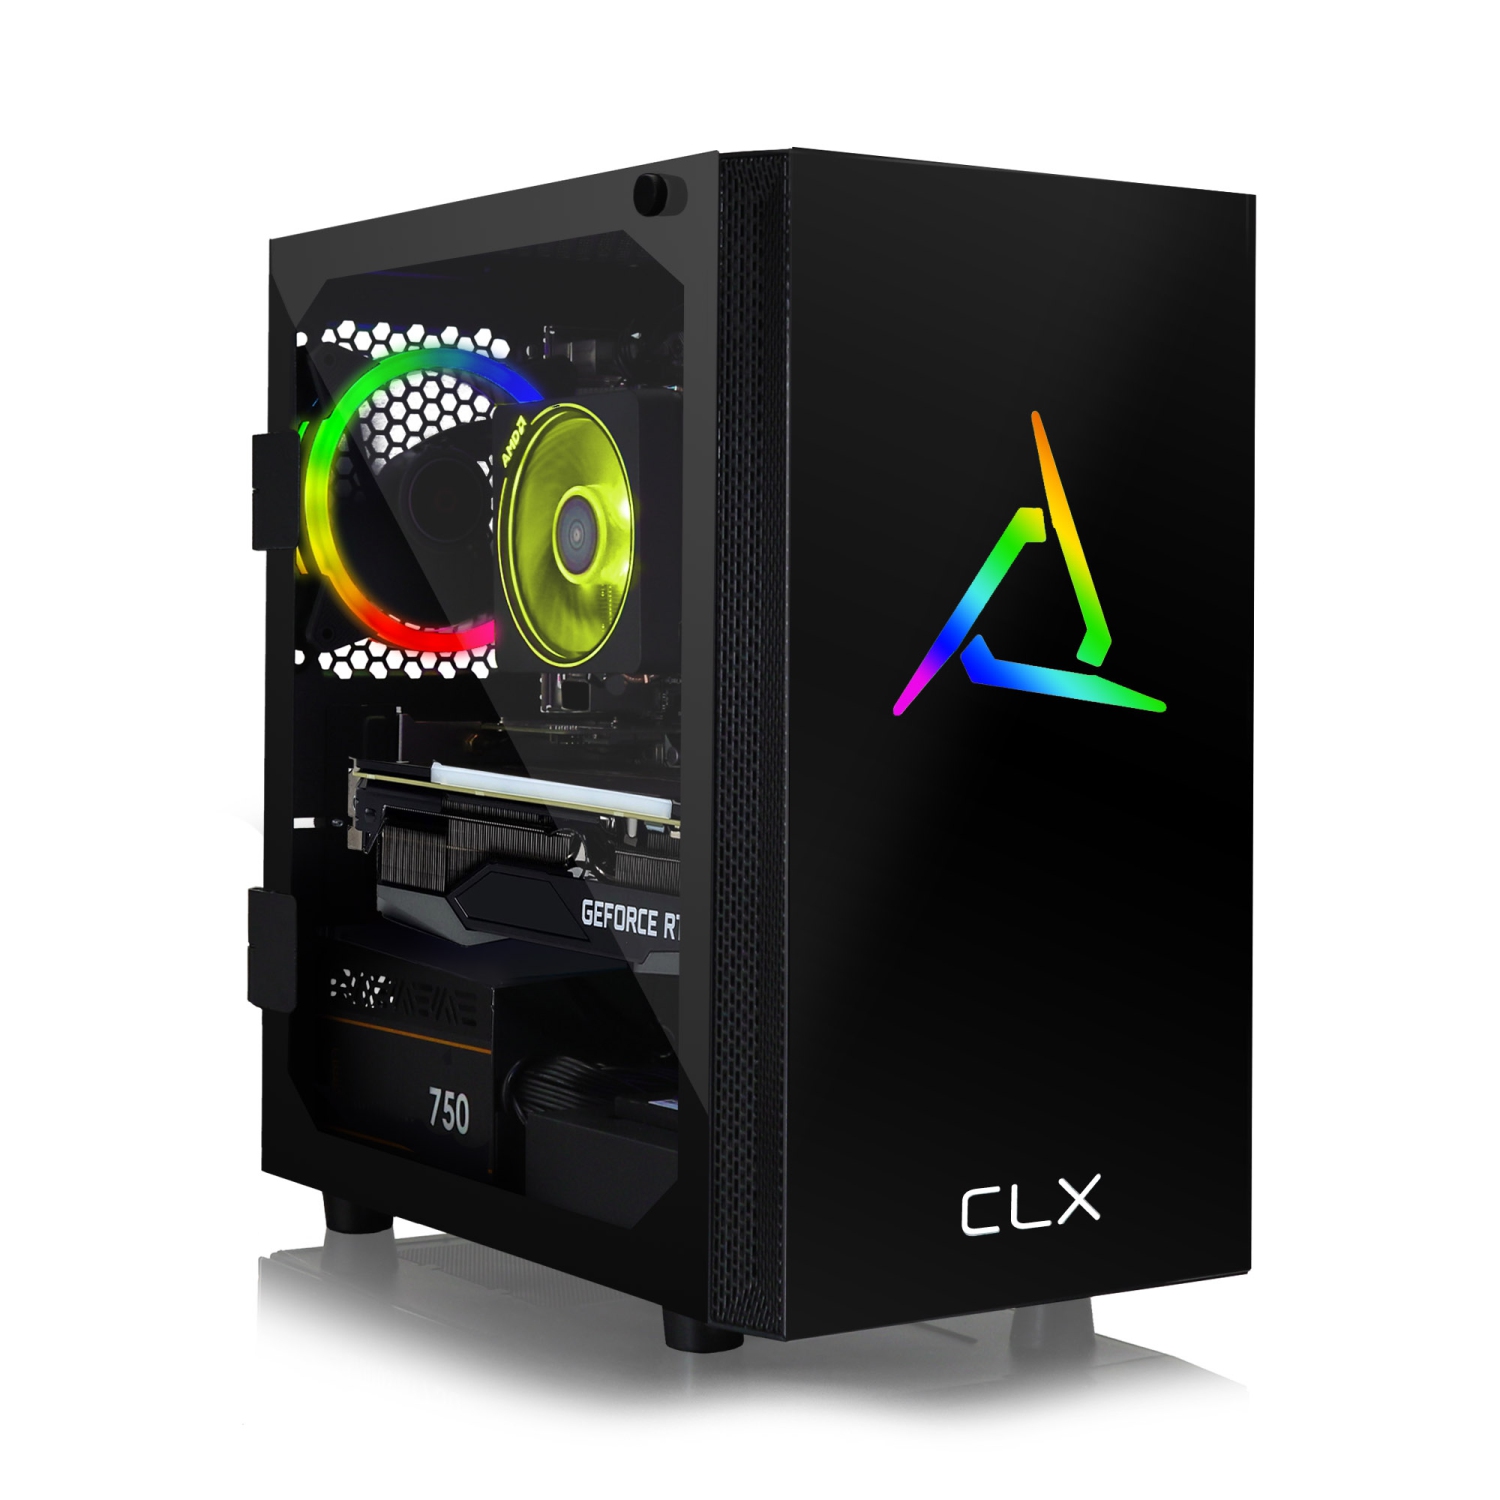 CLX SET VR-Ready Gaming Desktop - AMD Ryzen 7 3700X 3.6GHz 8-Core Processor, 16GB DDR4 Memory, GeForce RTX 3060 Ti 8GB GDDR6 Graphics, 480GB SSD, 2TB HDD, WiFi, Windows 10 Home 64-bit